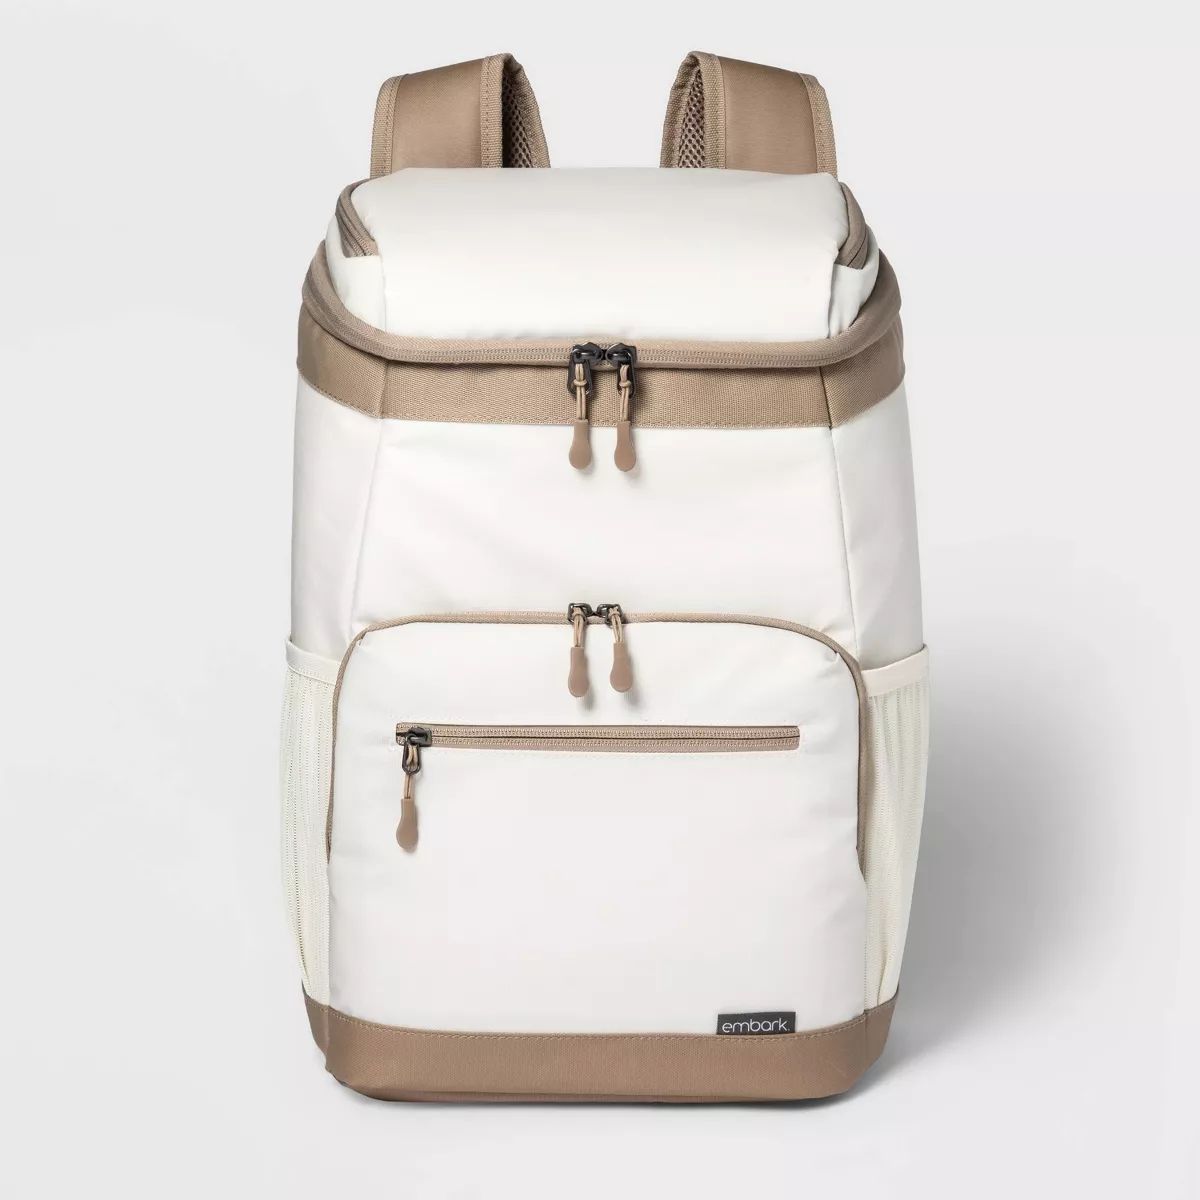 Soft Sided 18qt Backpack Cooler Tan - Embark™ | Target